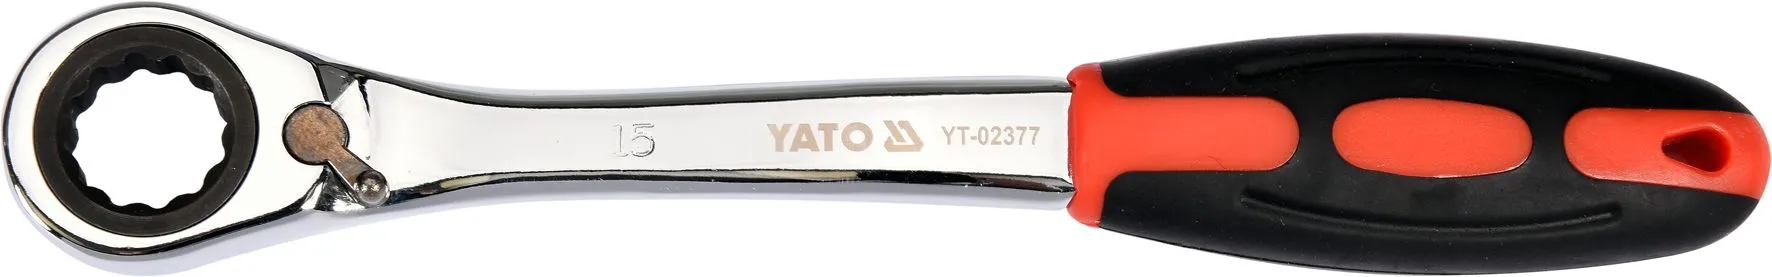 Ключ накидной с трещоткой 15мм CrV Yato YT-02377